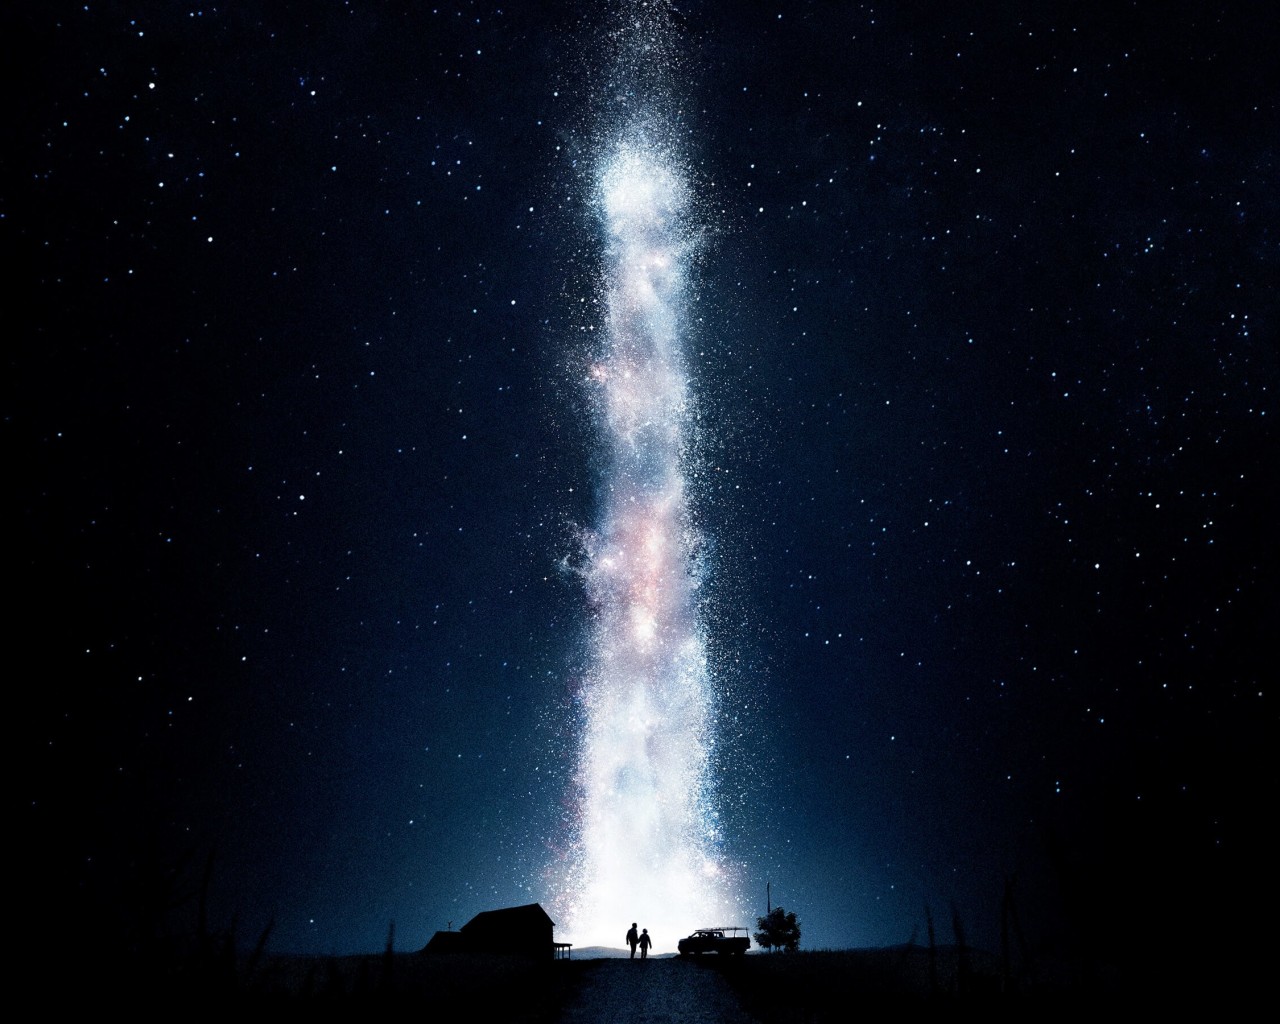 Interstellar (2014) Wallpaper for Desktop 1280x1024